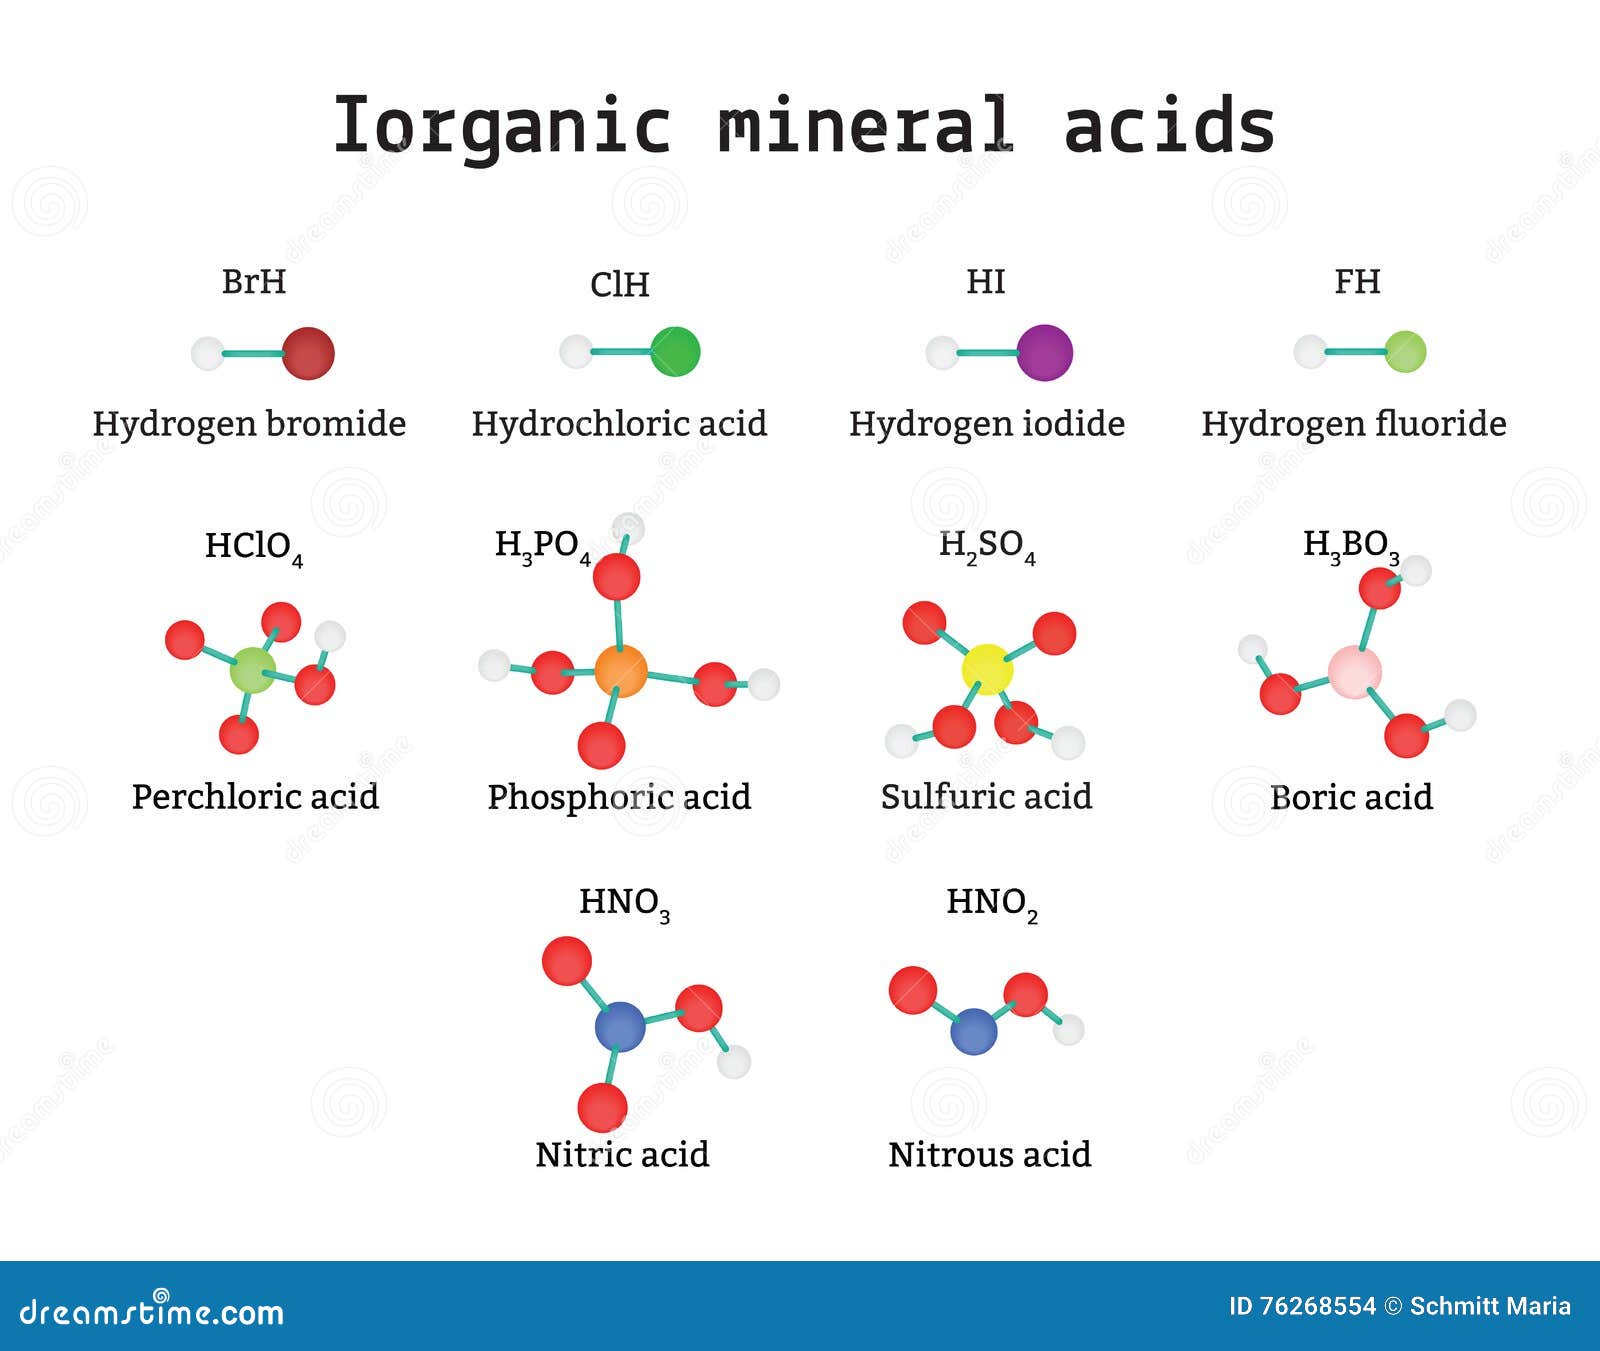 Are Acids Inorganic?